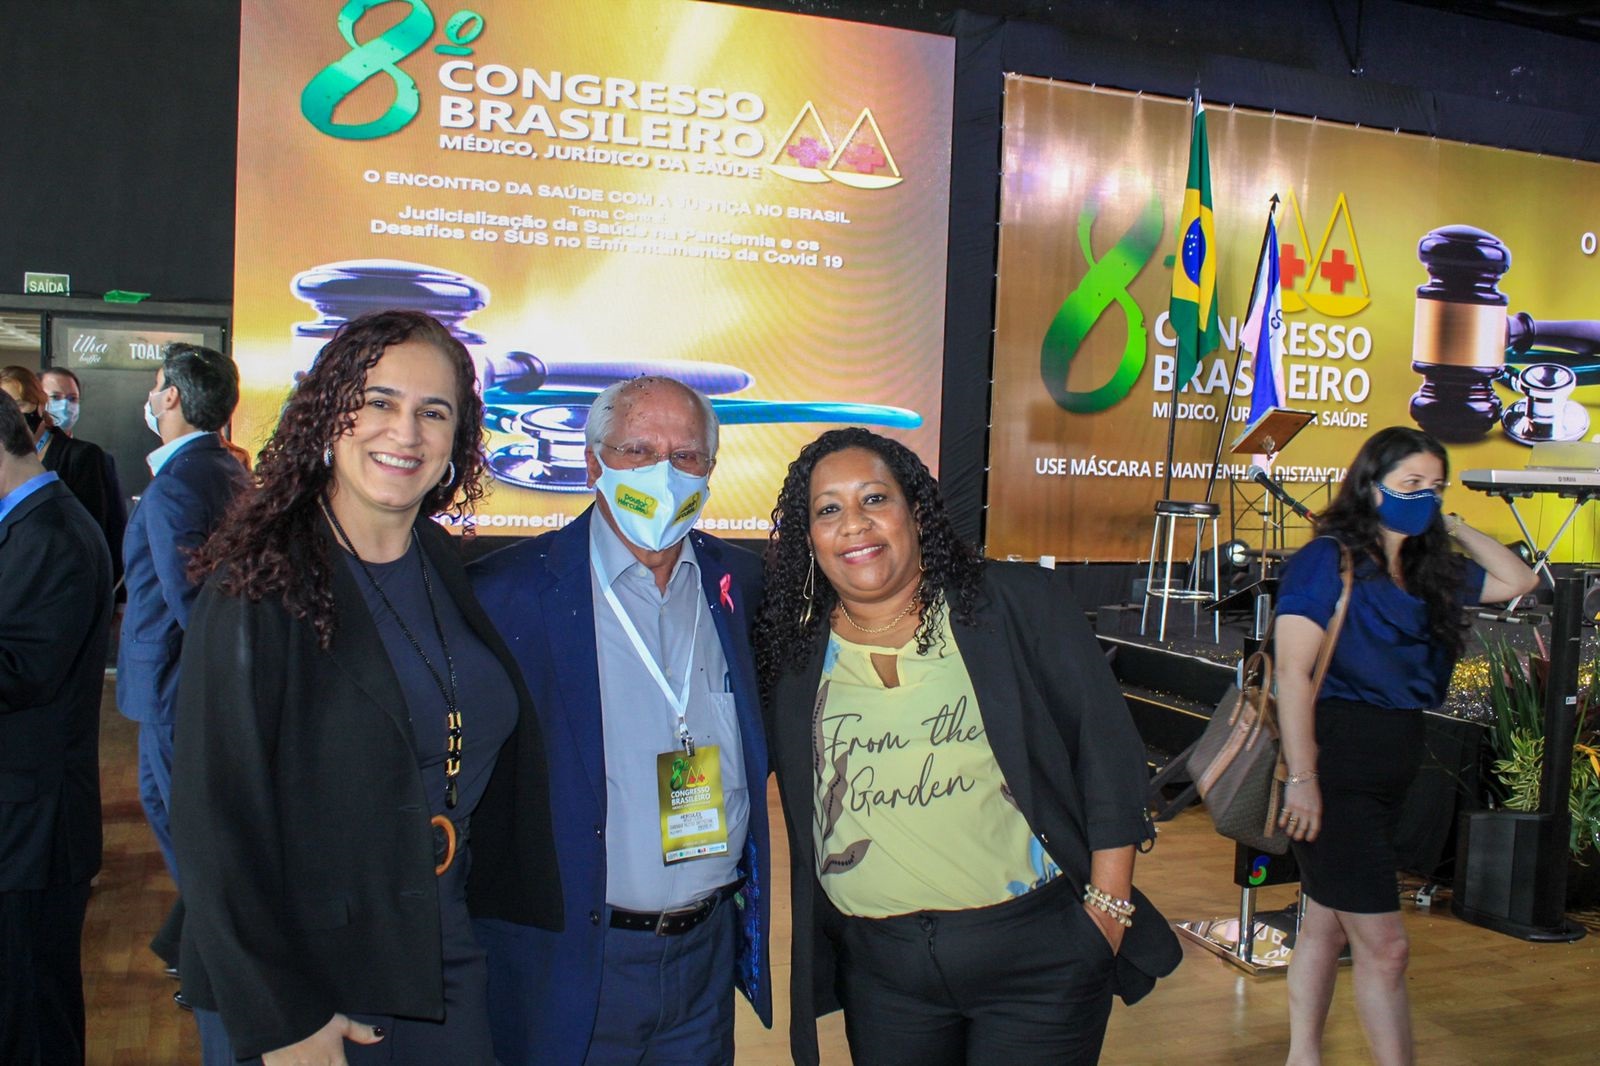 8 congresso brasileiro medico juridico da saude 12